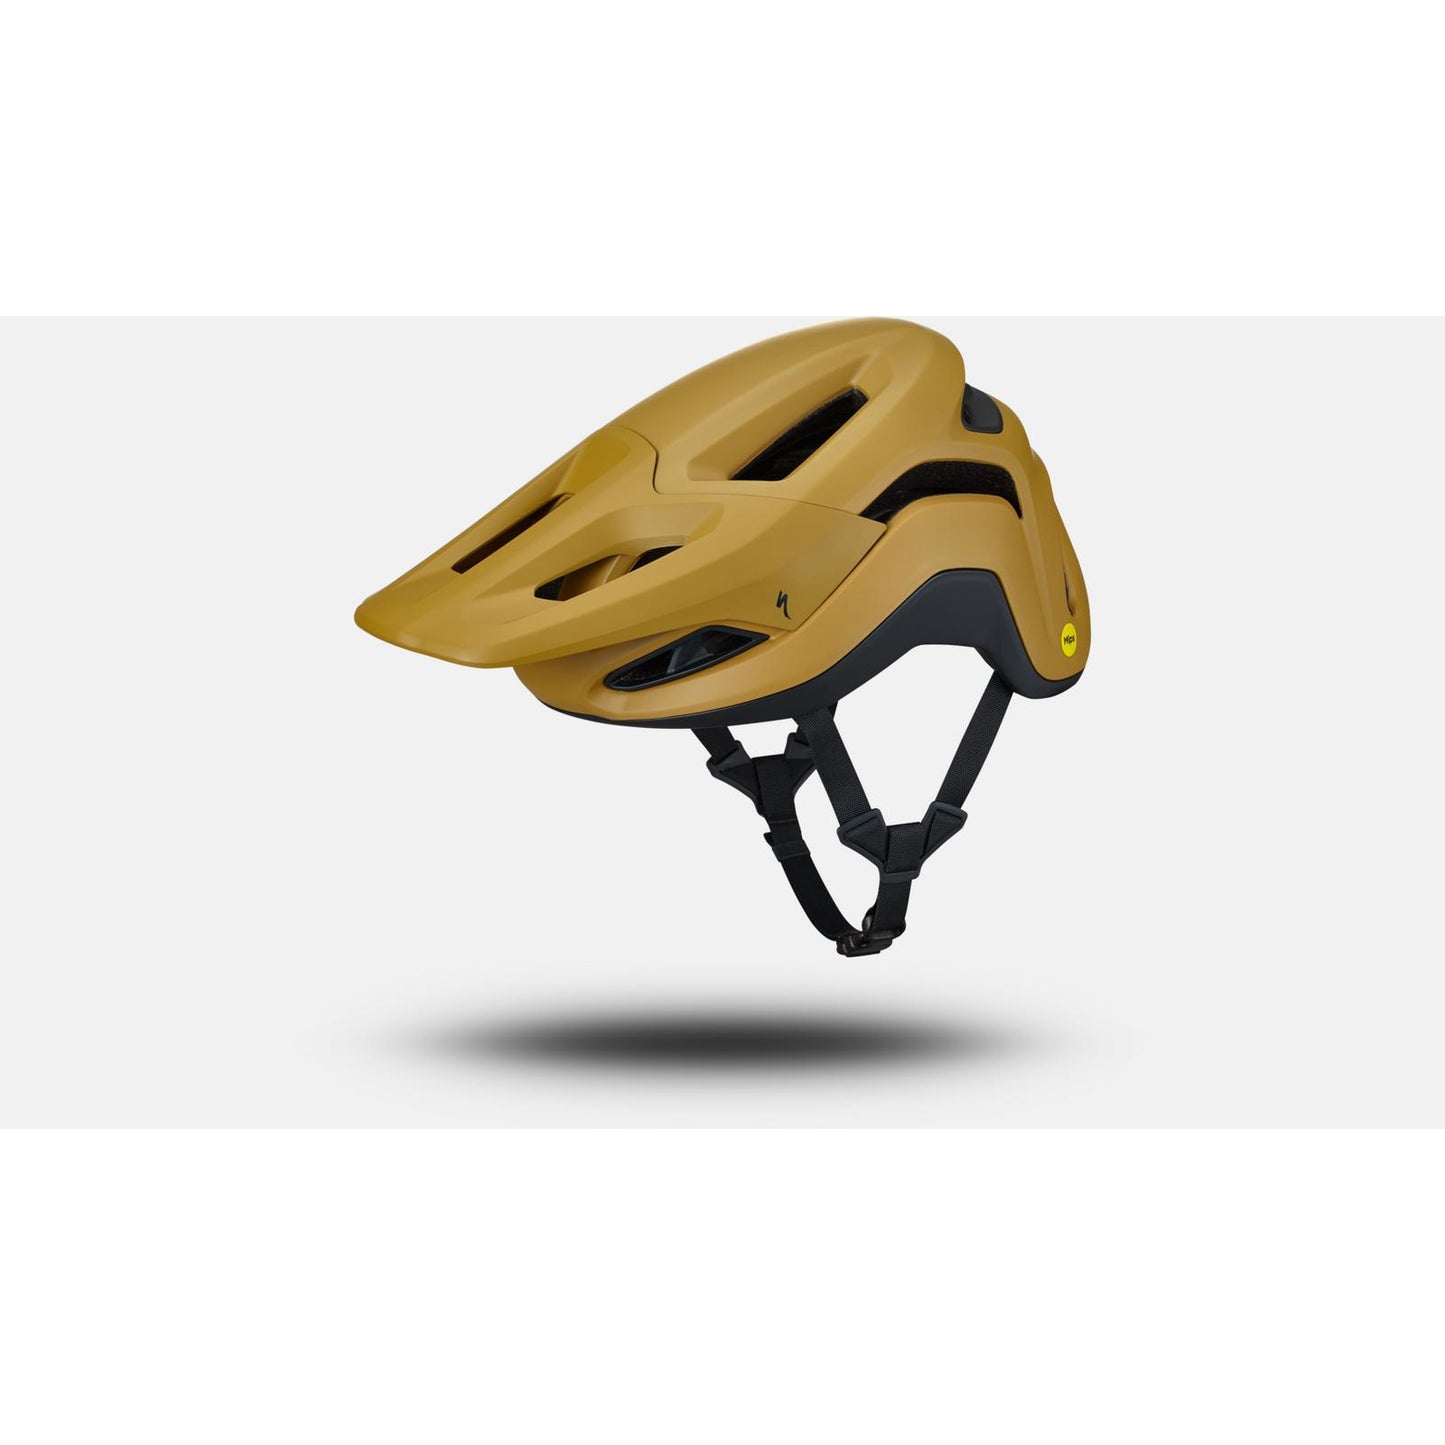 Specialized Ambush II Bike Helmet - Helmets - Bicycle Warehouse